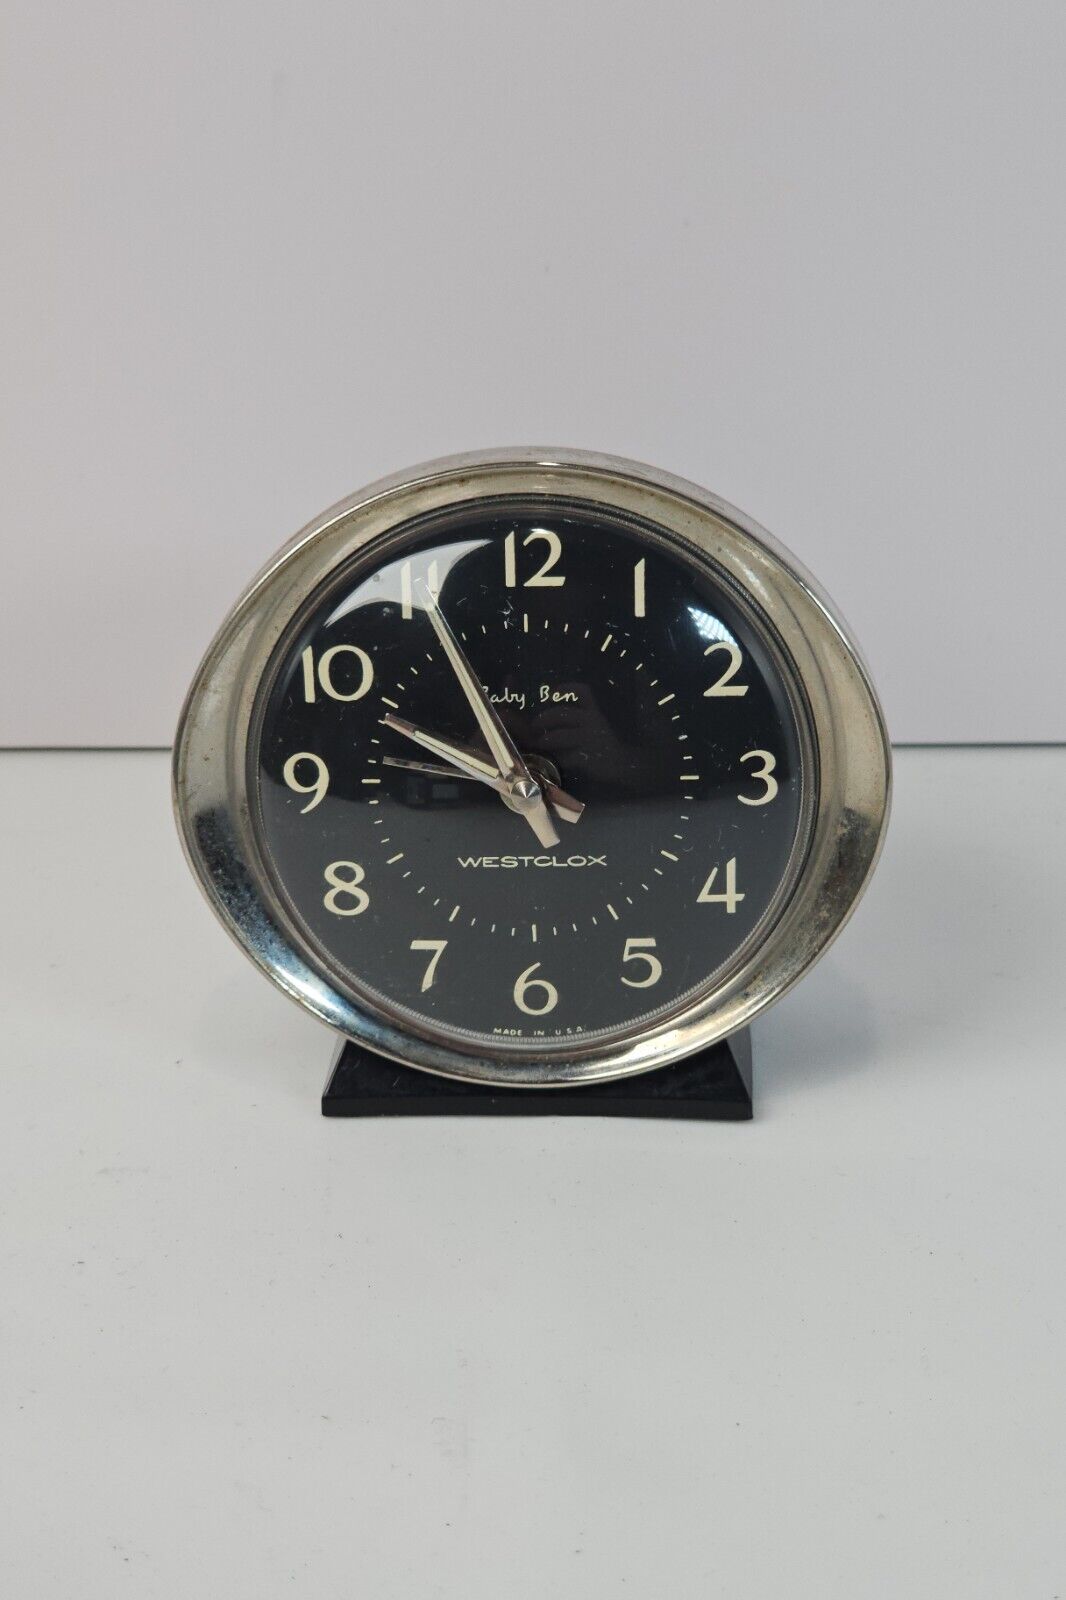 Working Vintage Westclox Baby Ben Wind Up Alarm Clock Black Model 11038